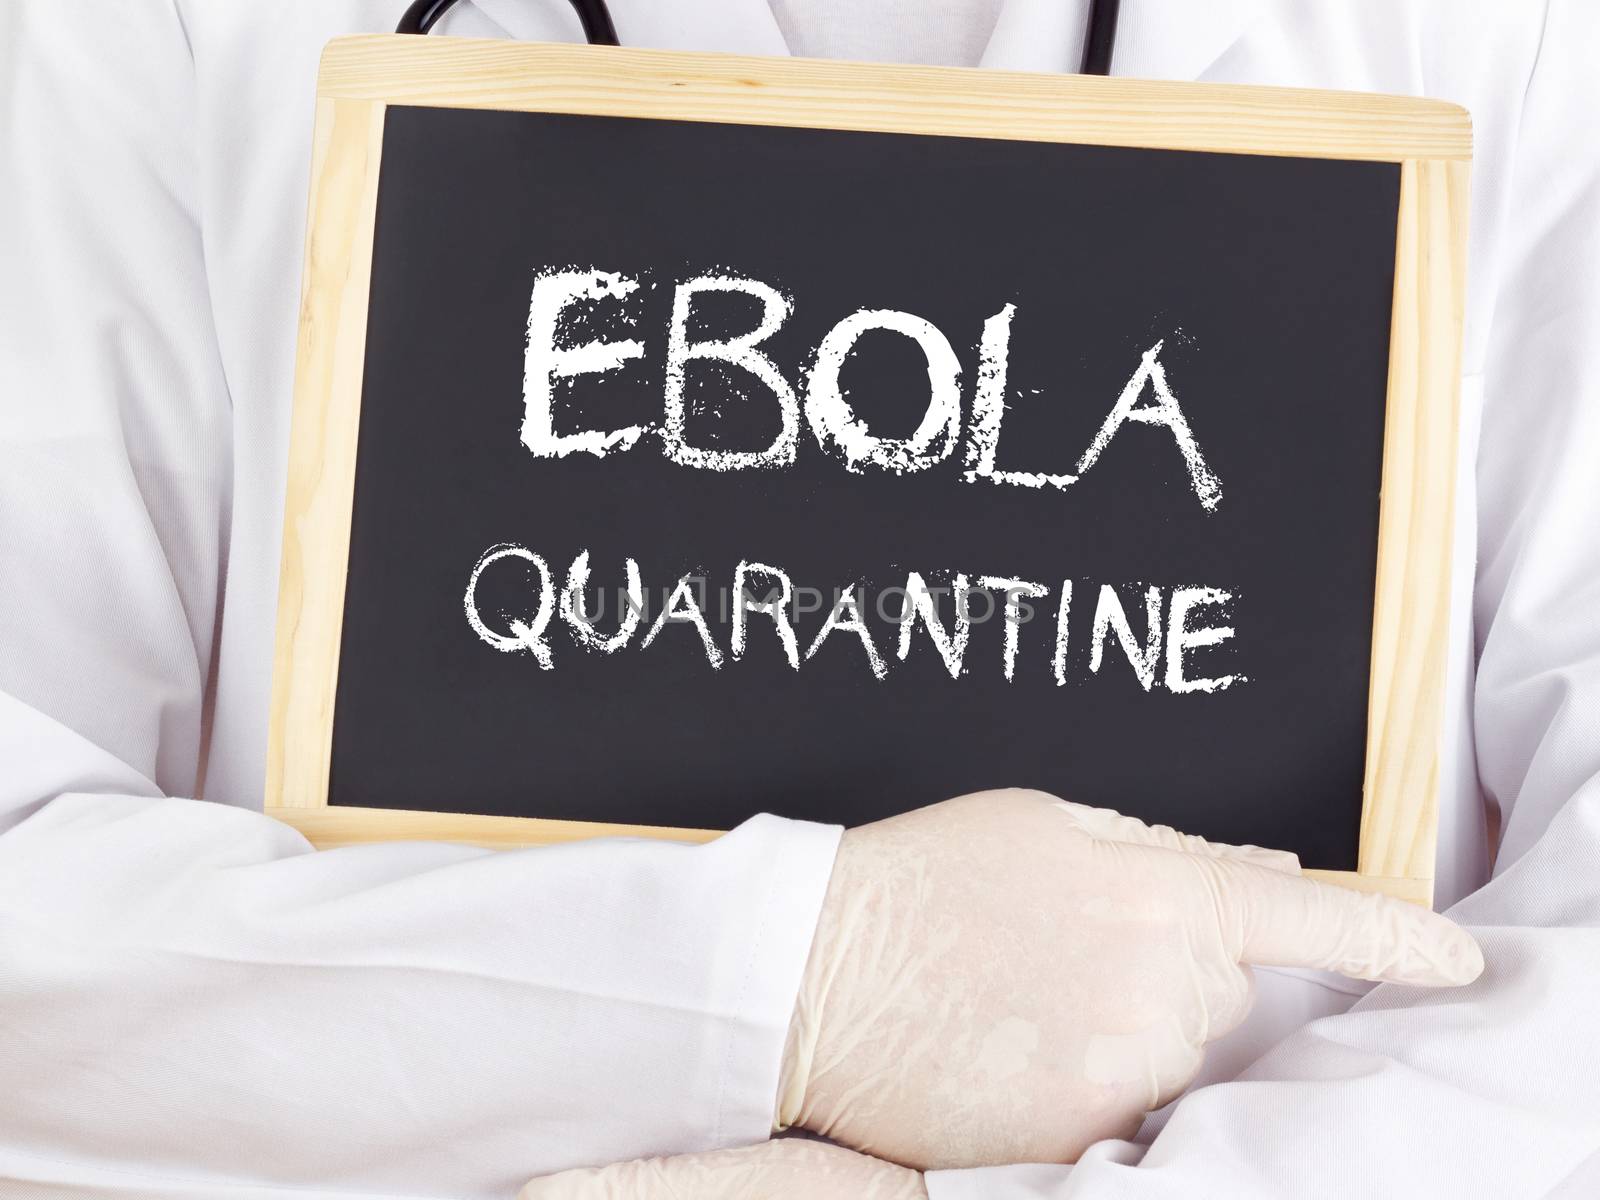 Doctor shows information: Ebola quarantine